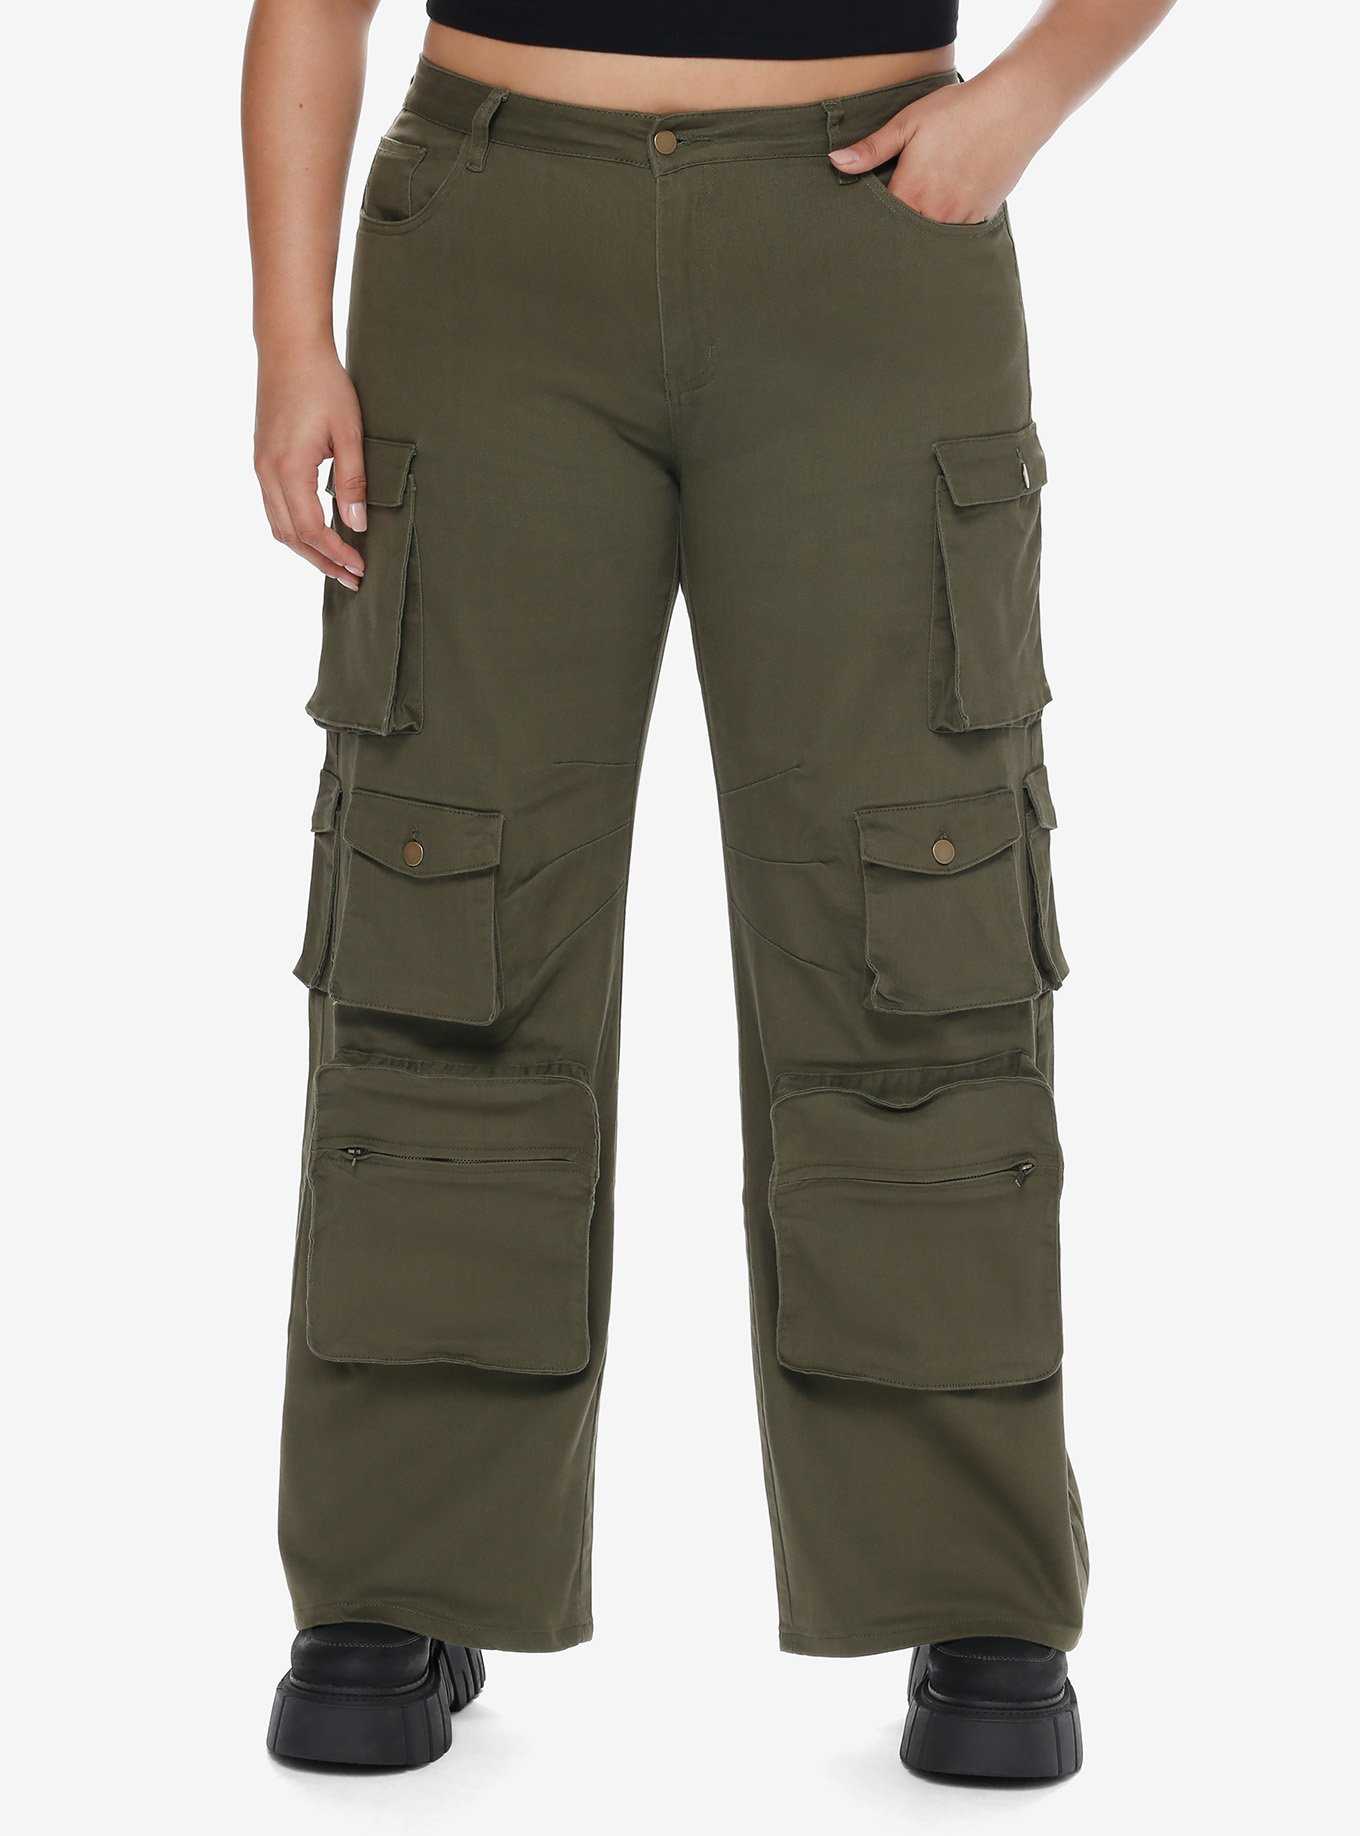 Olive Green Multi-Pocket Girls Cargo Pants Plus Size, , hi-res